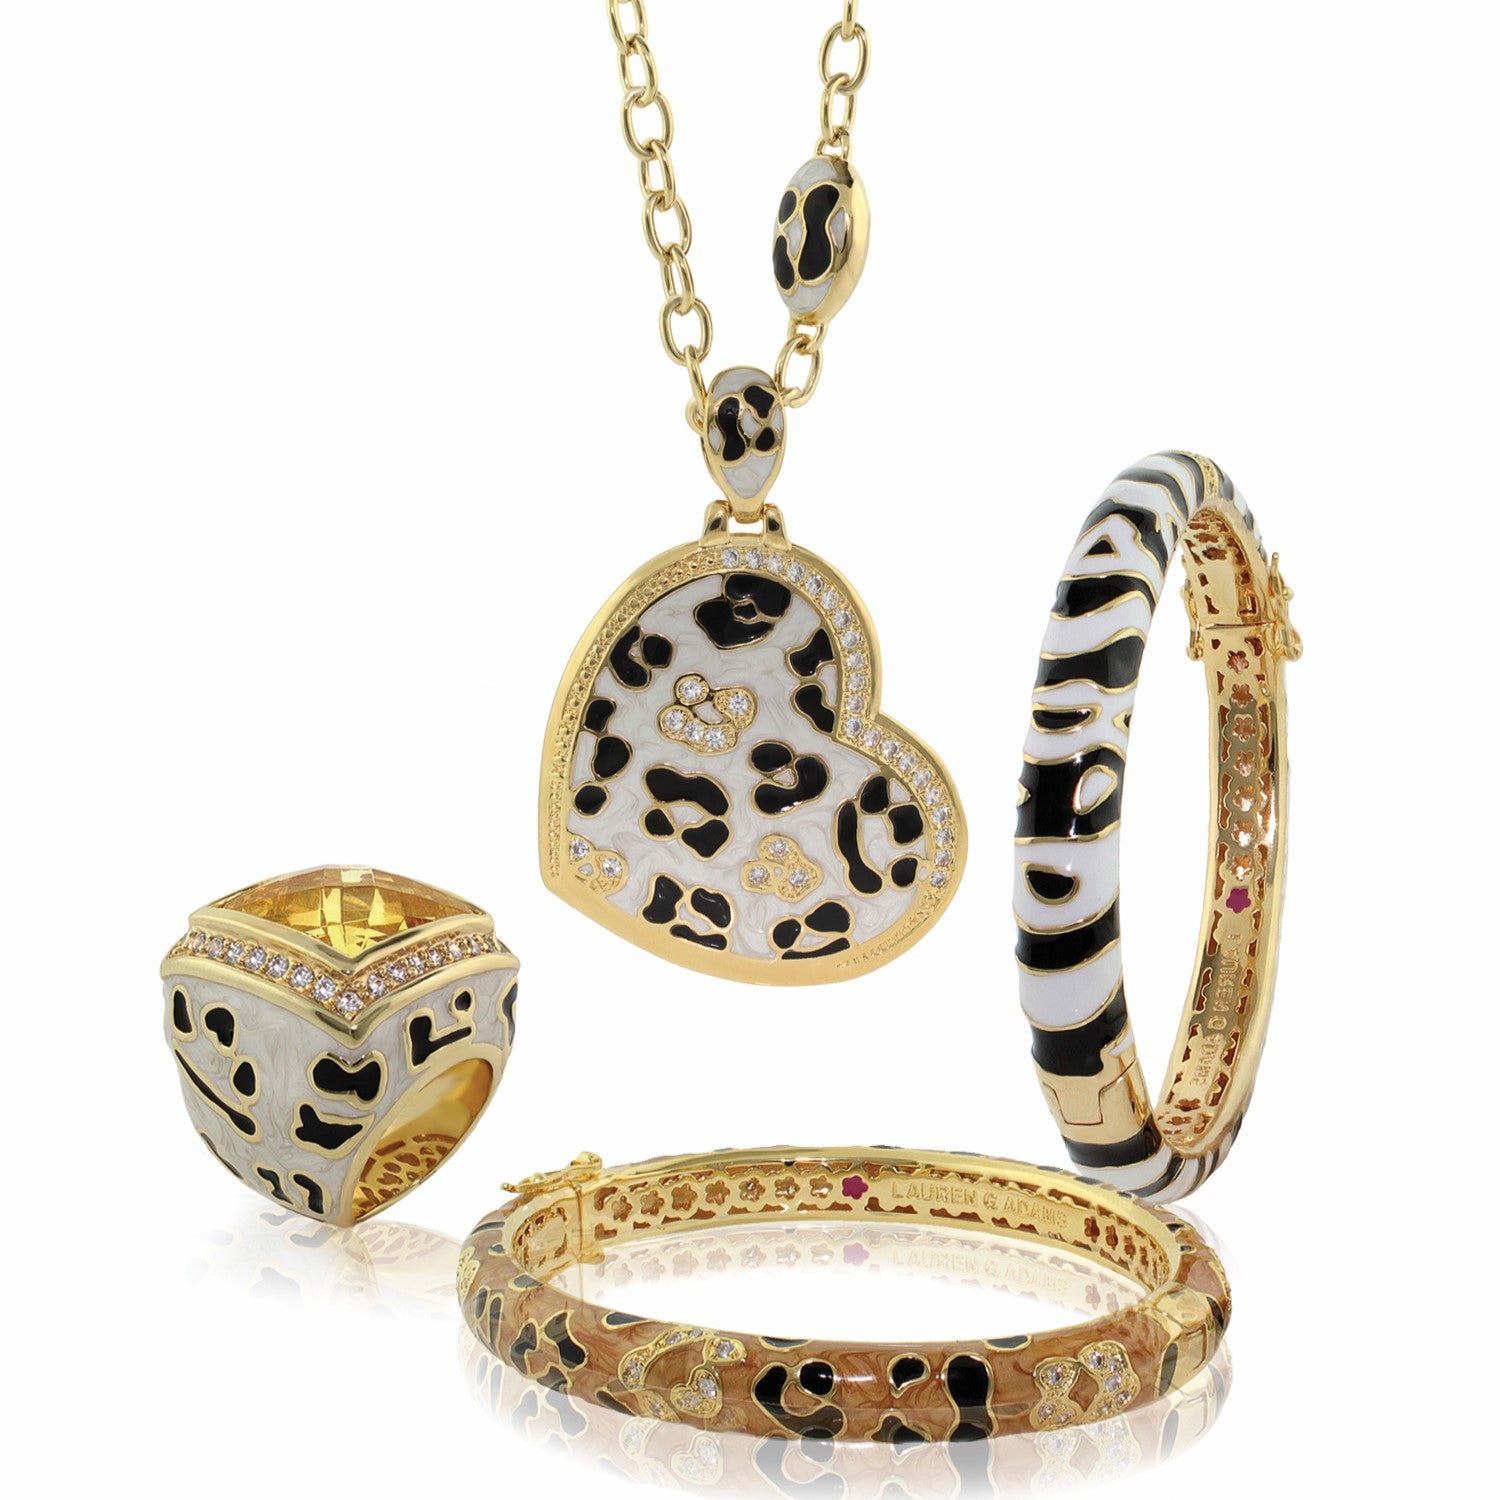 Lauren G Adams Girl's Gold Ladybug Charm Bracelet with Multicolor Enamel:  Precious Accents, Ltd.